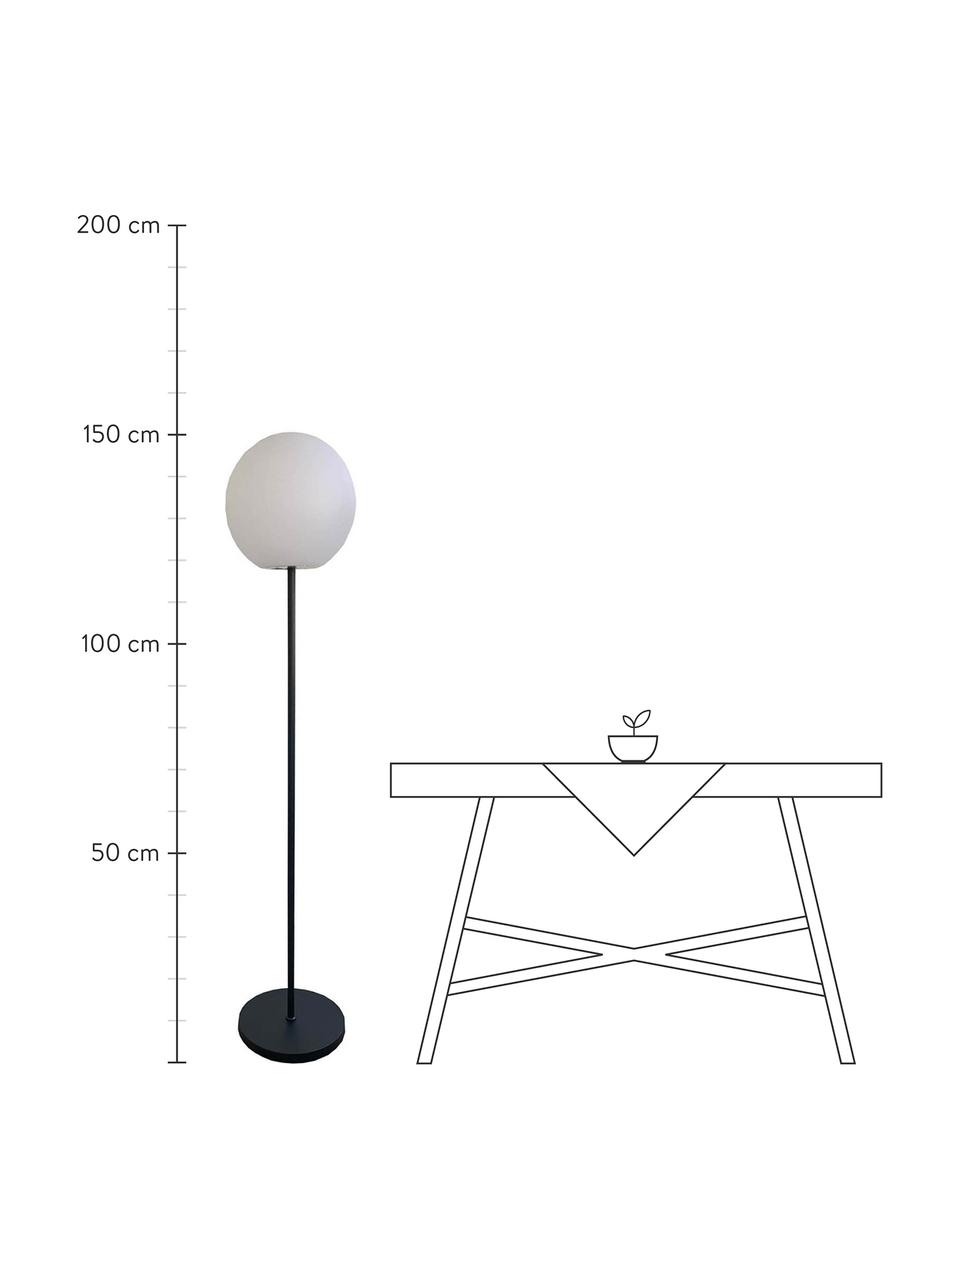 Mobile Dimmbare Outdoor Stehlampe Luny, Lampenschirm: Polyethylen, Lampenfuß: Metall, beschichtet, Weiß, Schwarz, Ø 30 x H 150 cm